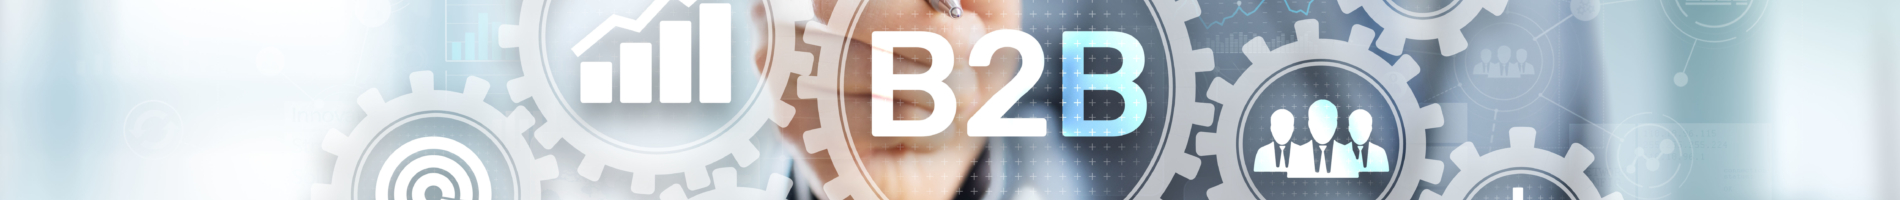 Digital Marketing B2 B 